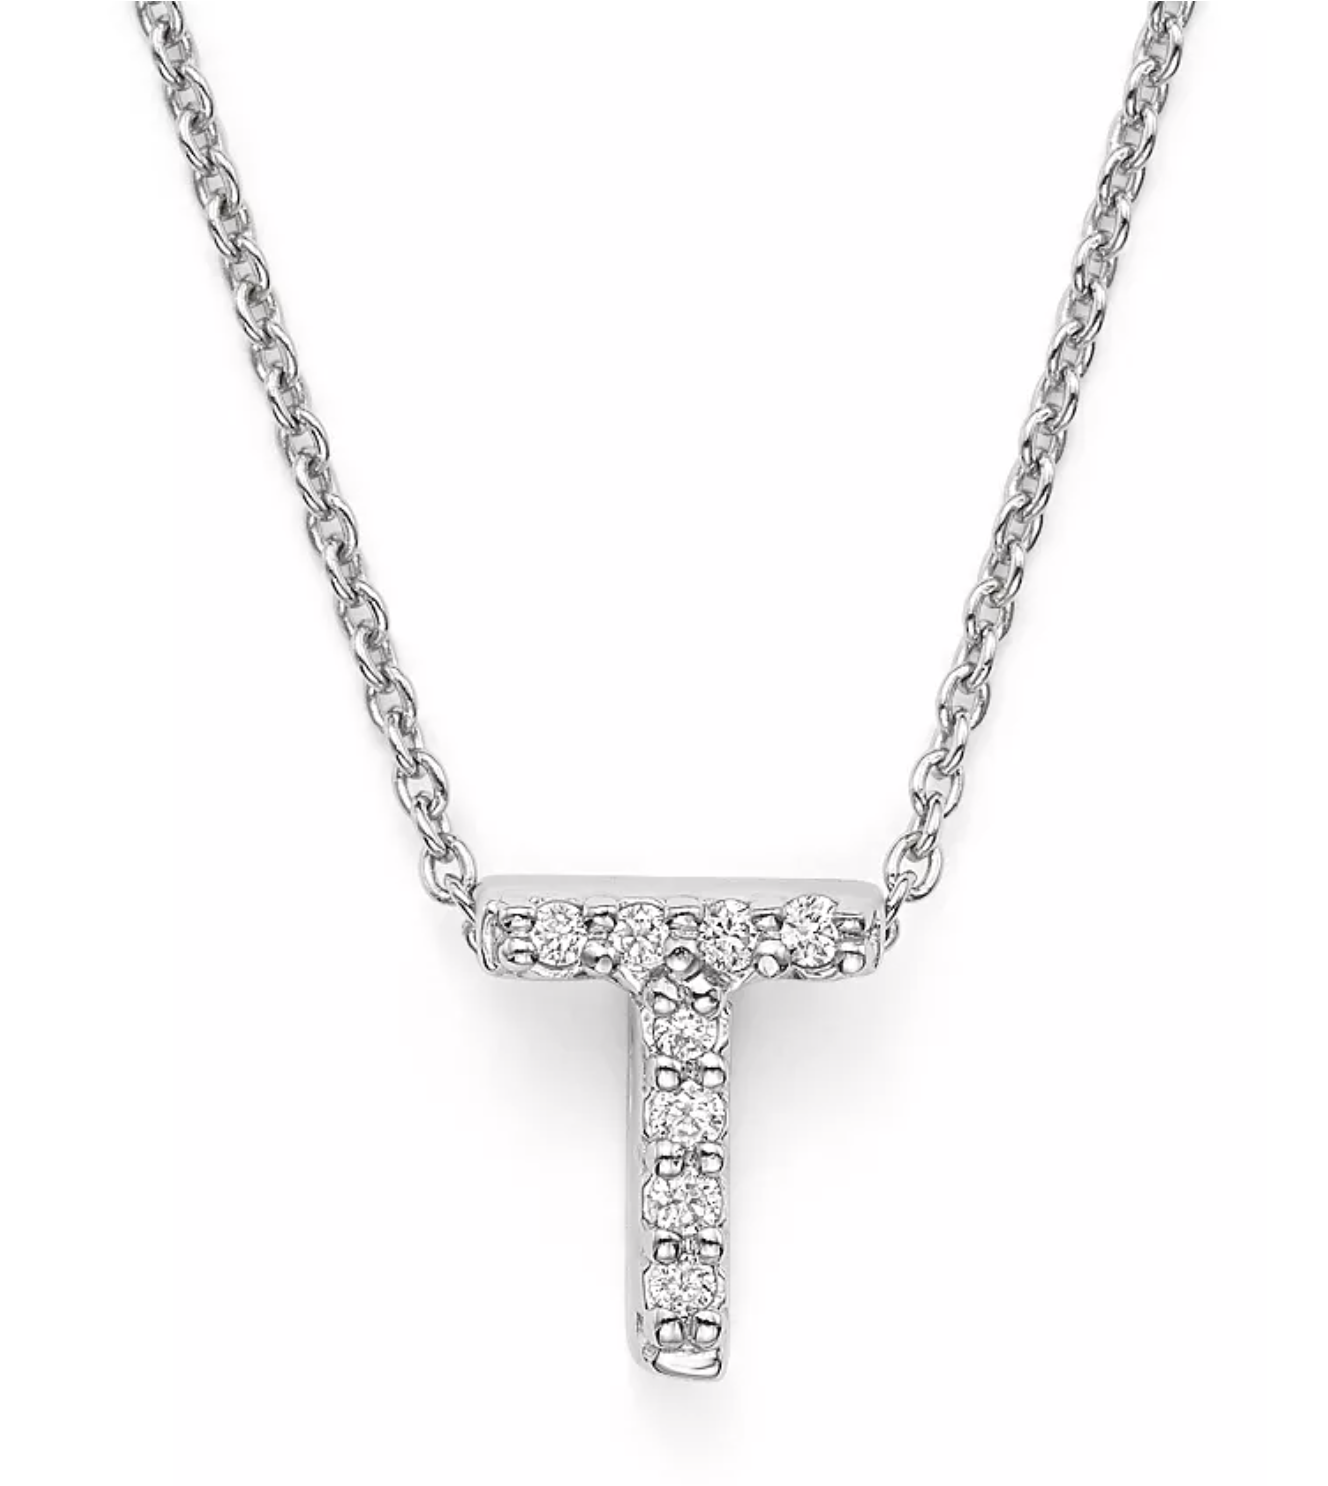 18K WG Love Letter 'T' Pendant Necklace with Diamonds